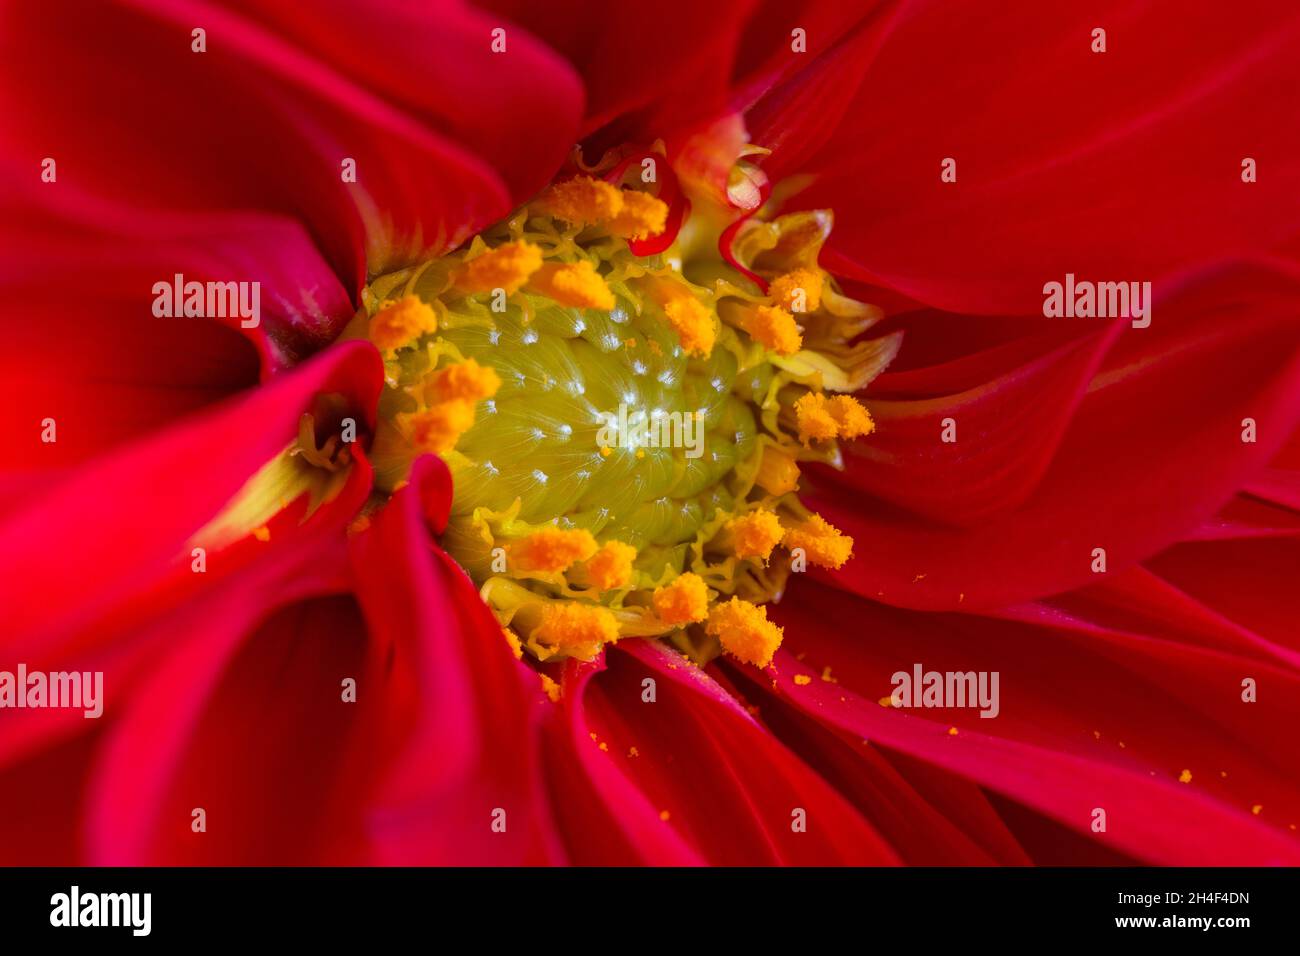 Red center of pink beautiful dahlia flower showing fibonacci pattern Stock Photo